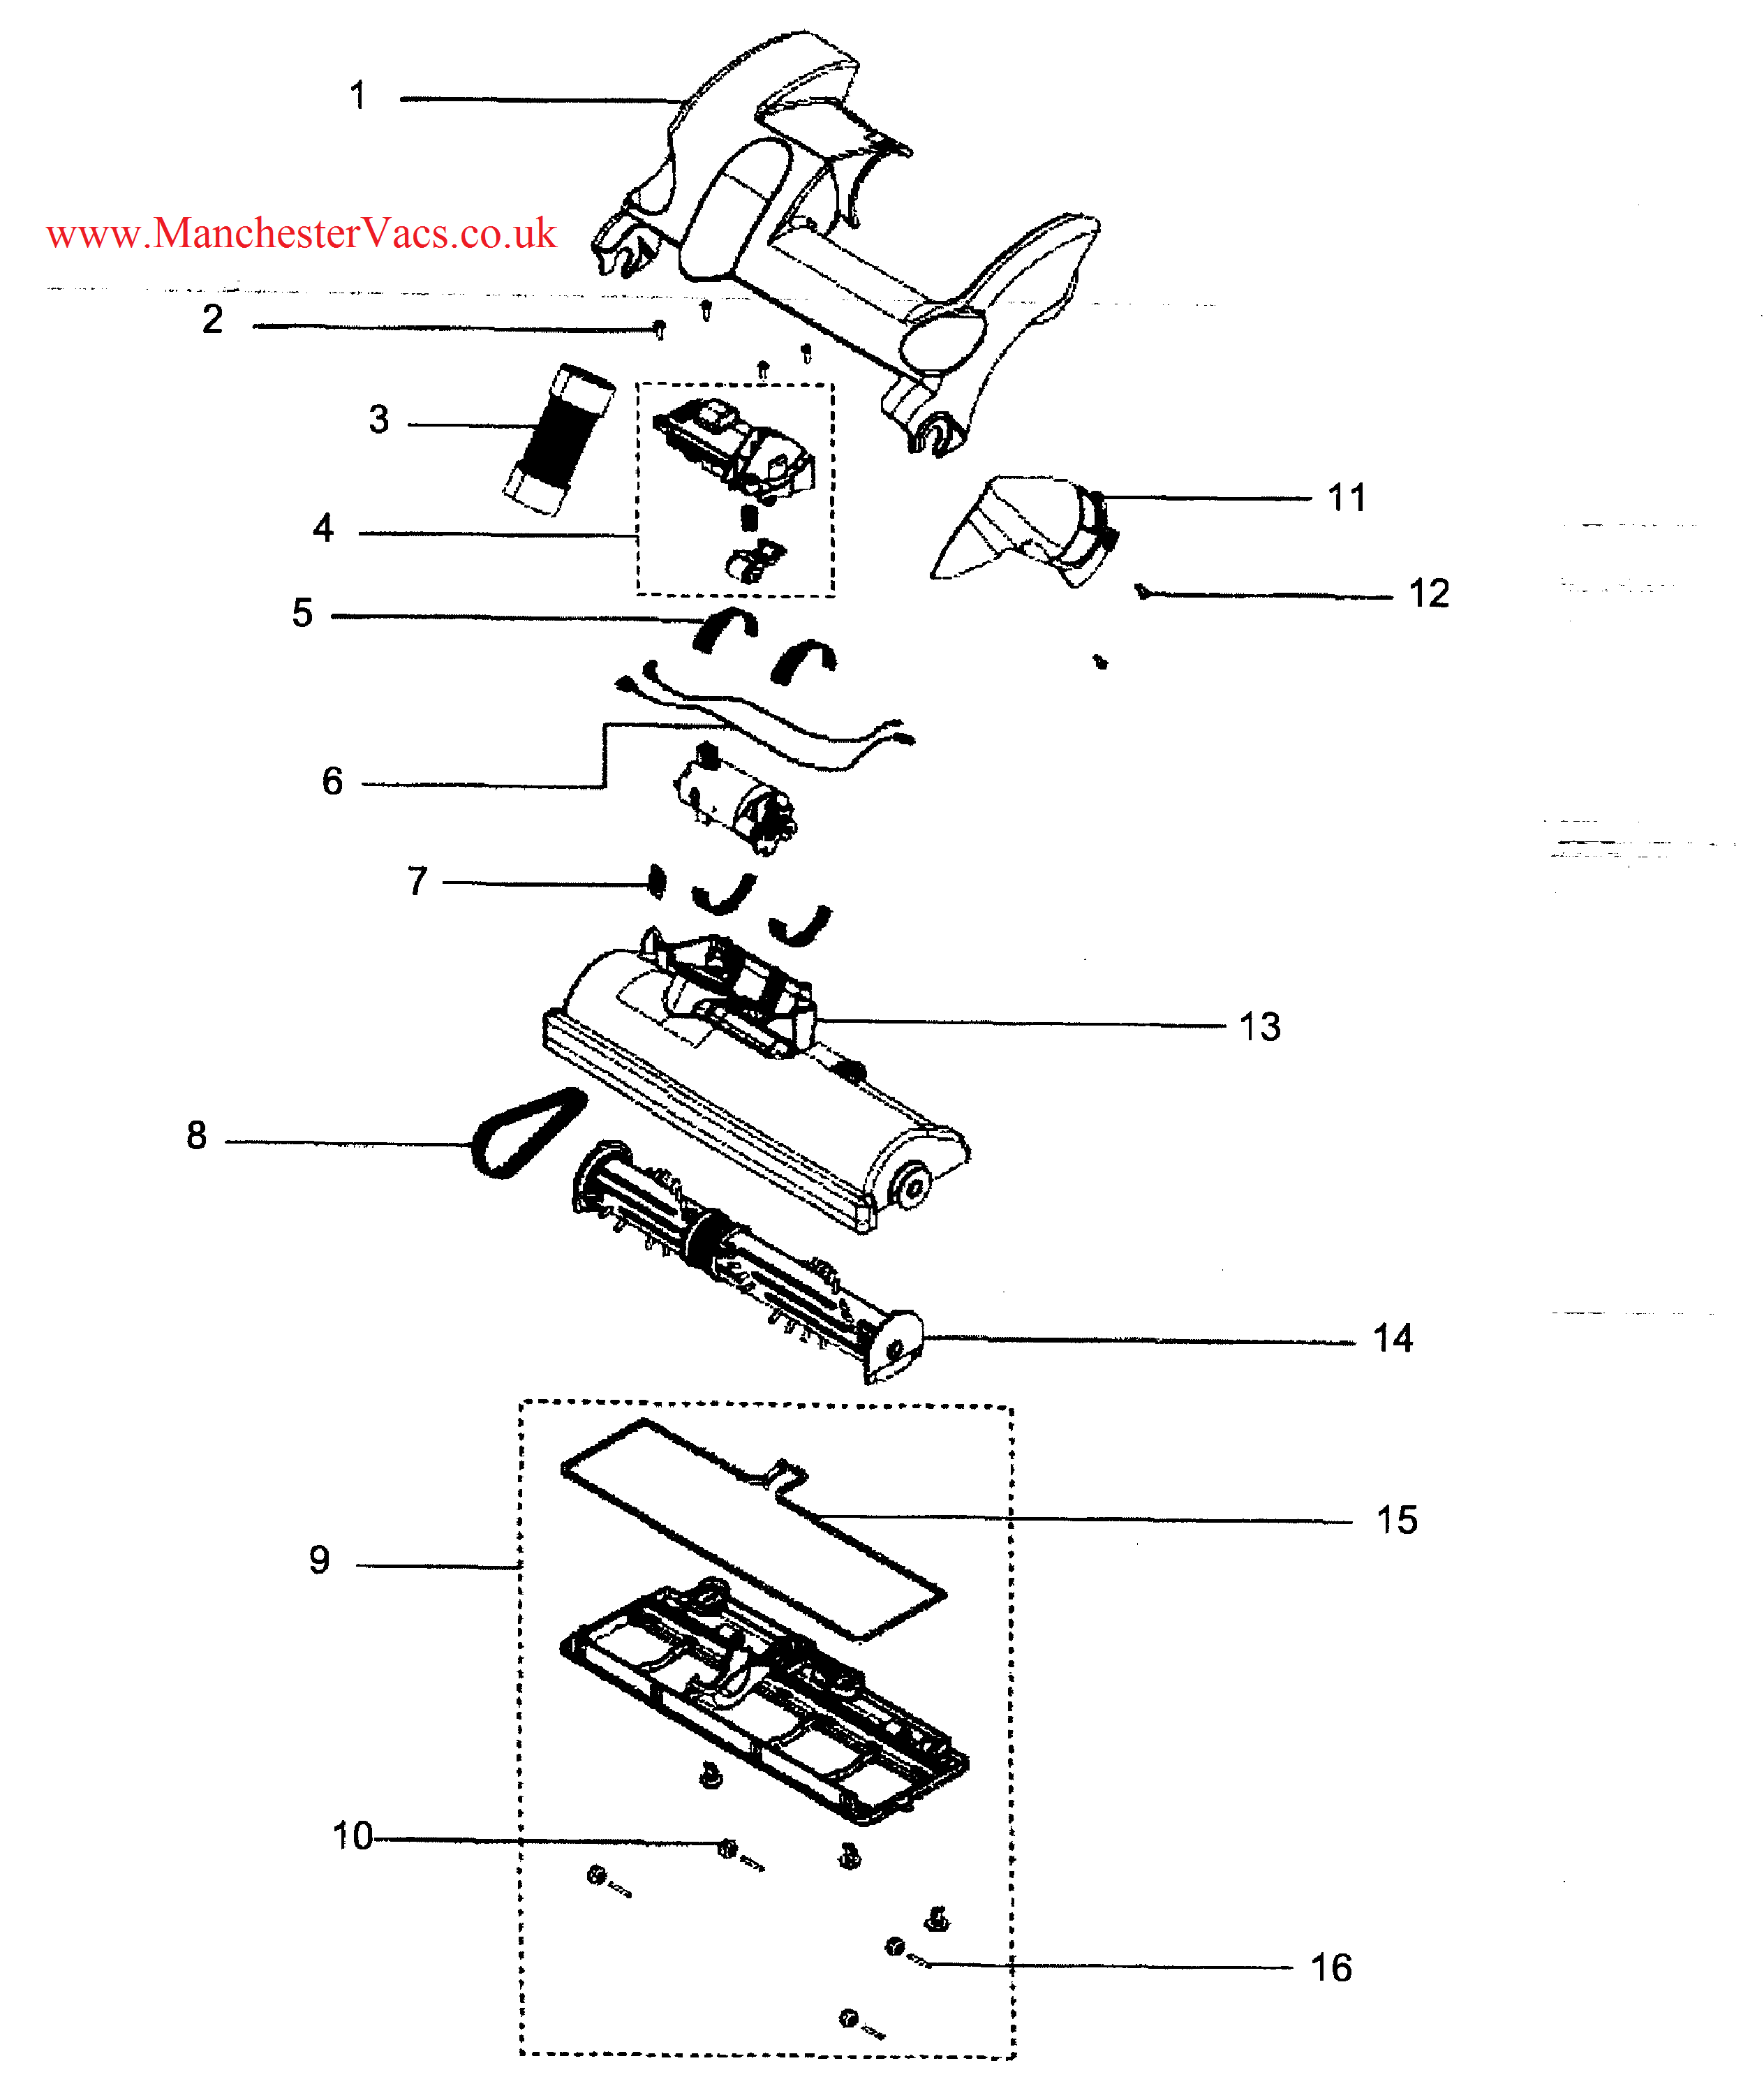 Dyson Dc35 Parts Diagram - Free Wiring Diagram